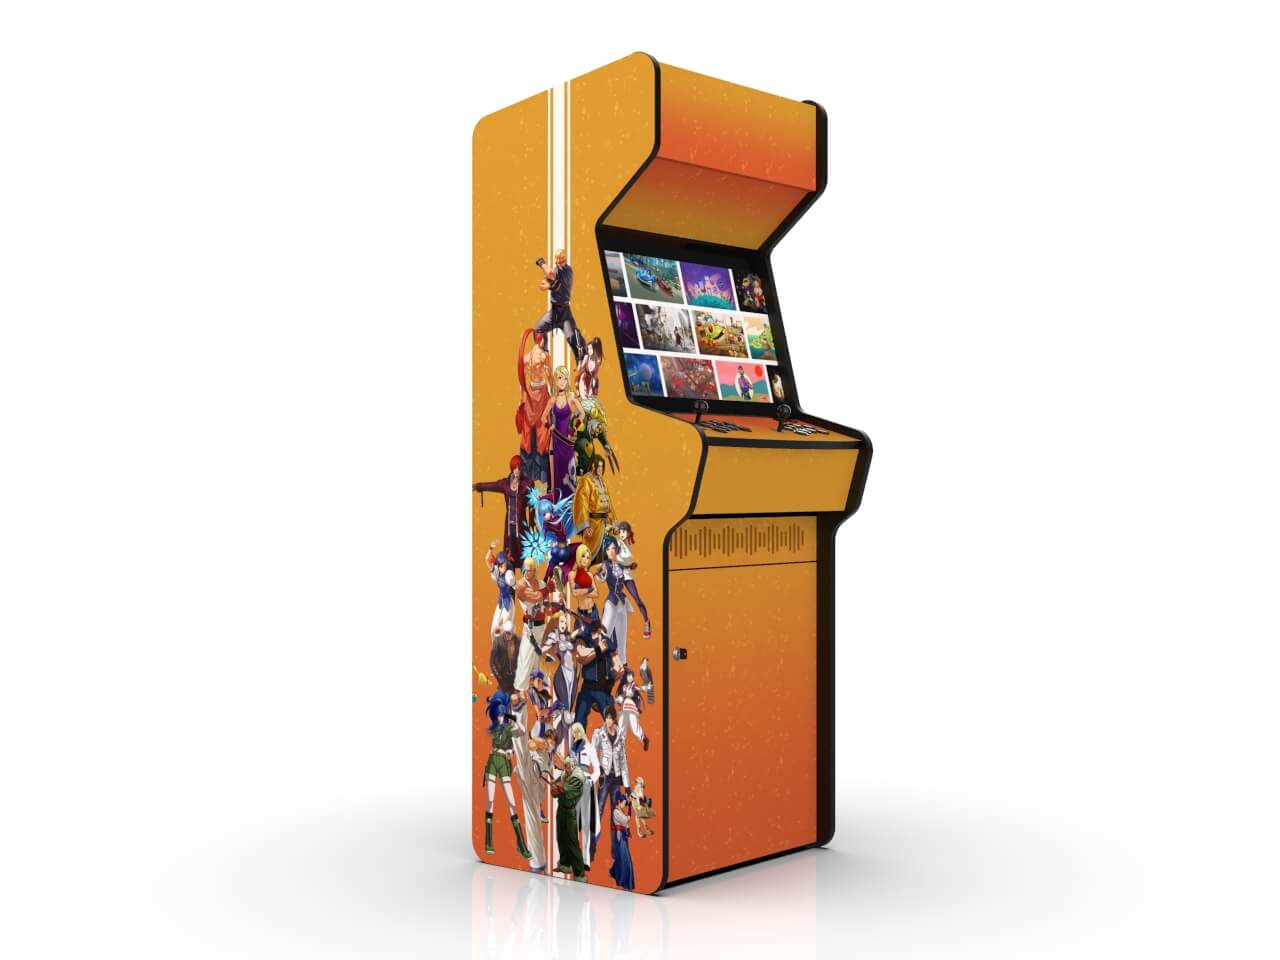 Stickers borne d'arcade  PacMan - Arcade for Good